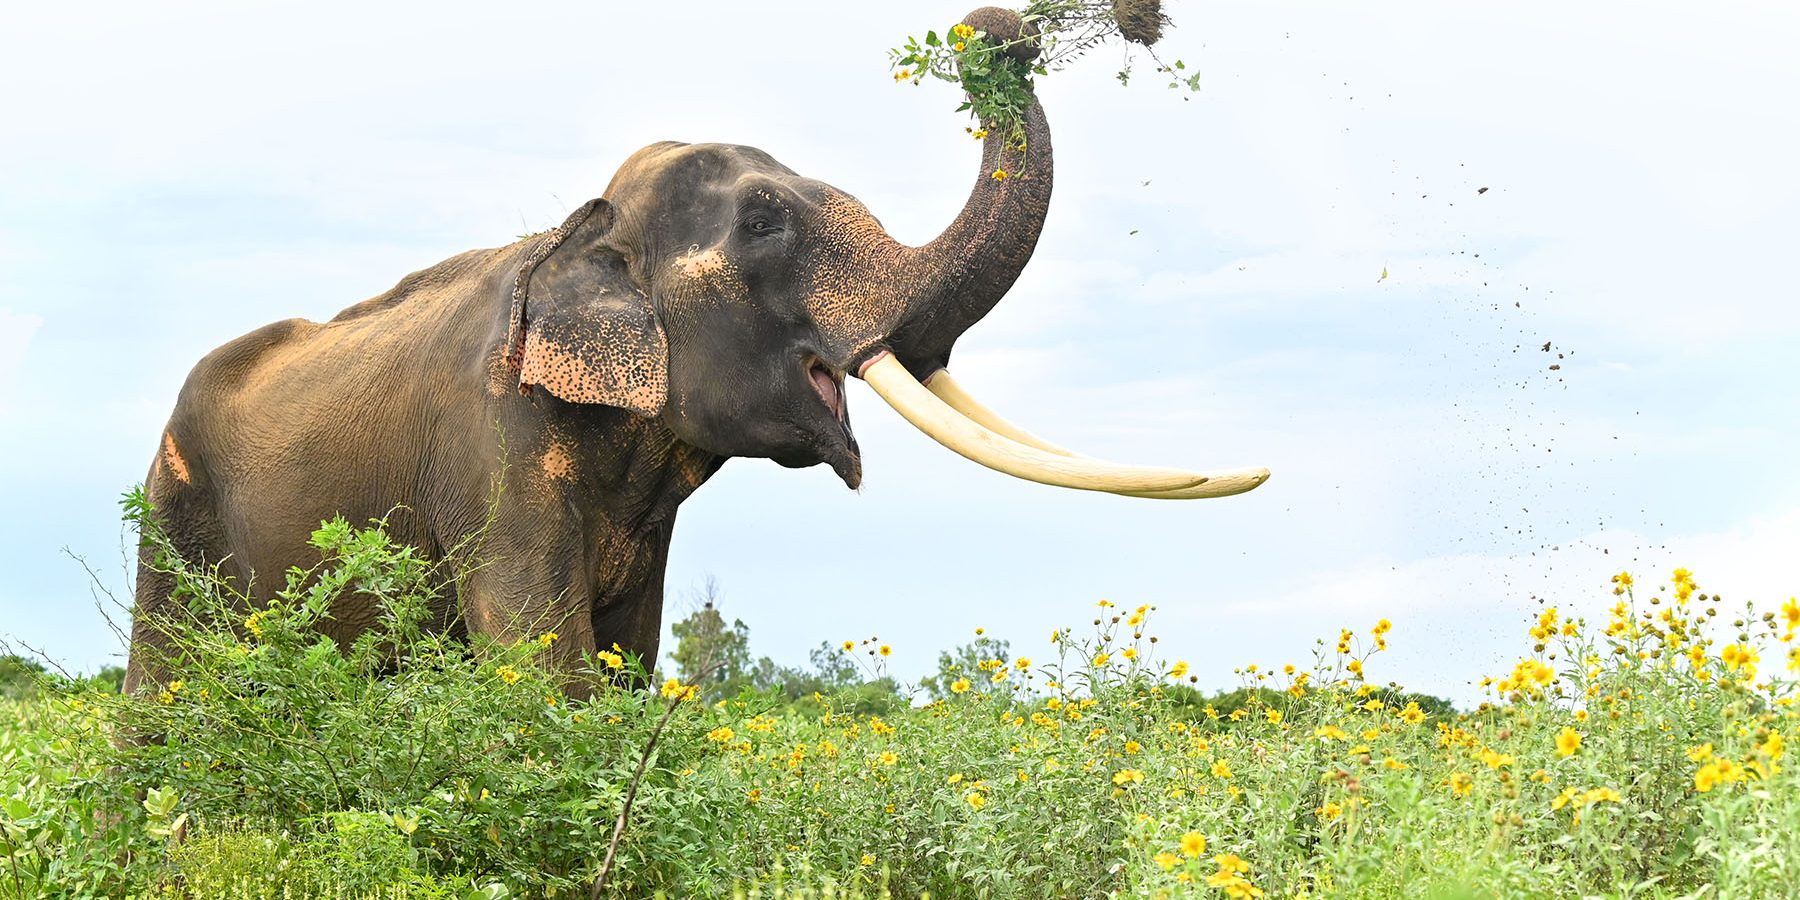 Introducing The Subspecies Of Asian Elephants - Wildlife SOS